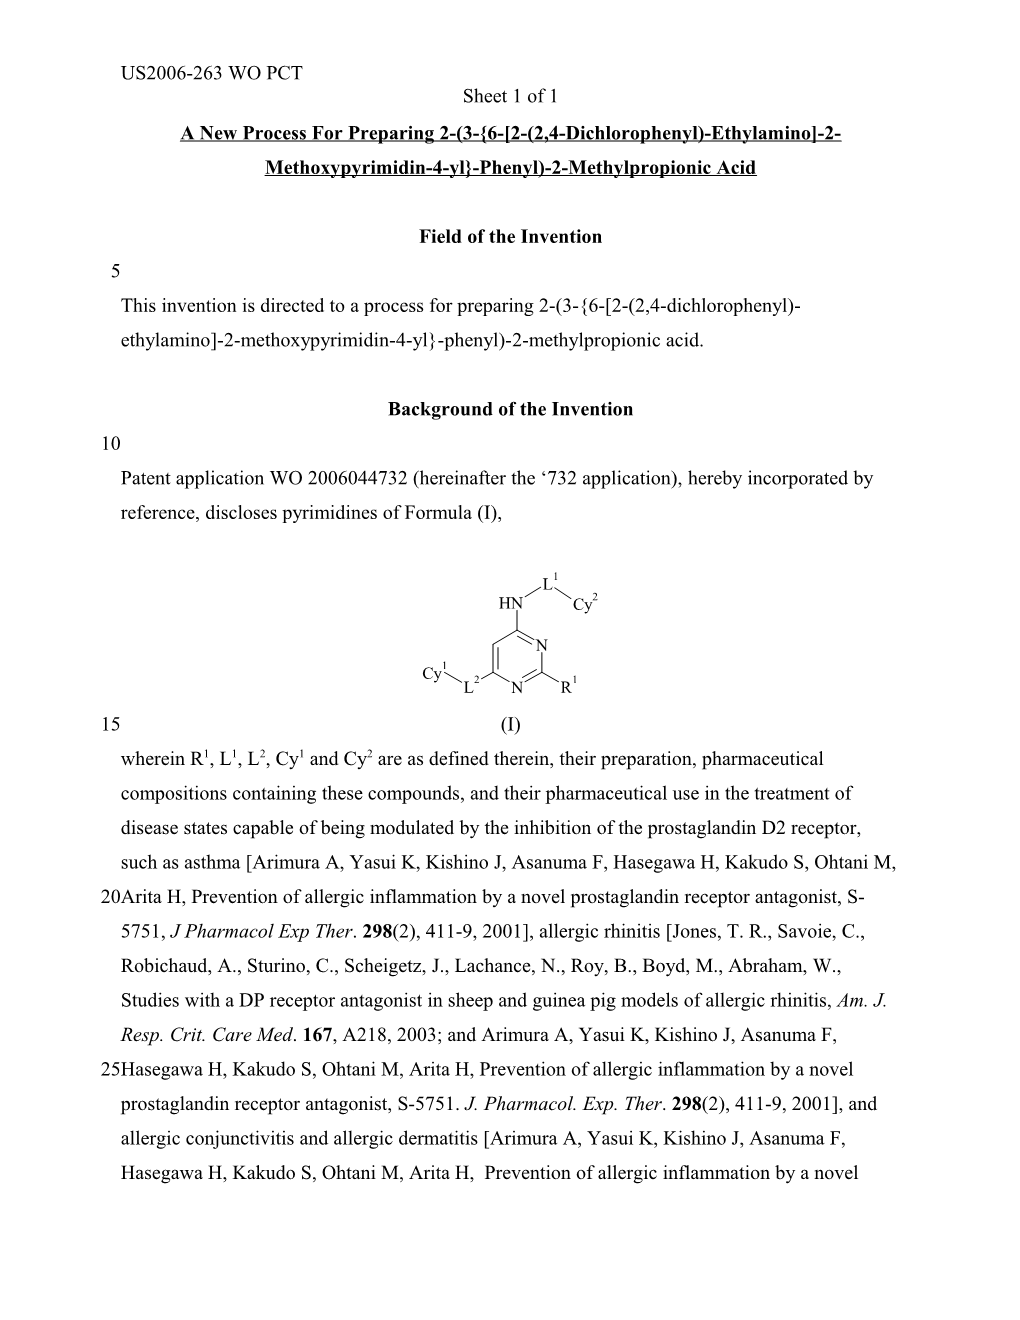 A New Process for Preparing 2-(3- 6- 2-(2,4-Dichloro-Phenyl)-Ethylamino